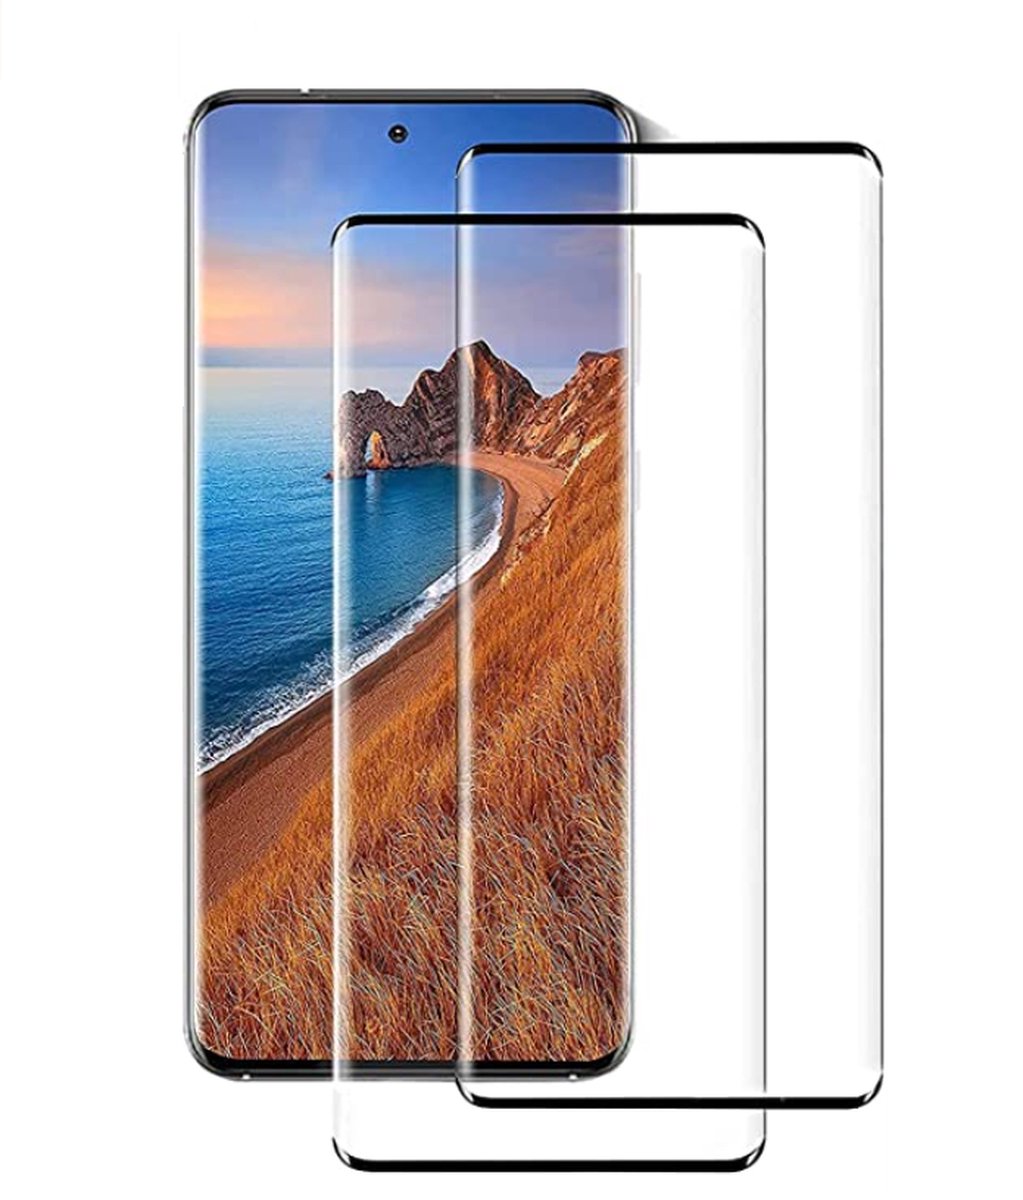 screenprotector Samsung Galaxy S20 plus screenprotector 2 packs - tempered glass - beschermlaag voor Galaxy S20 plus Samsung